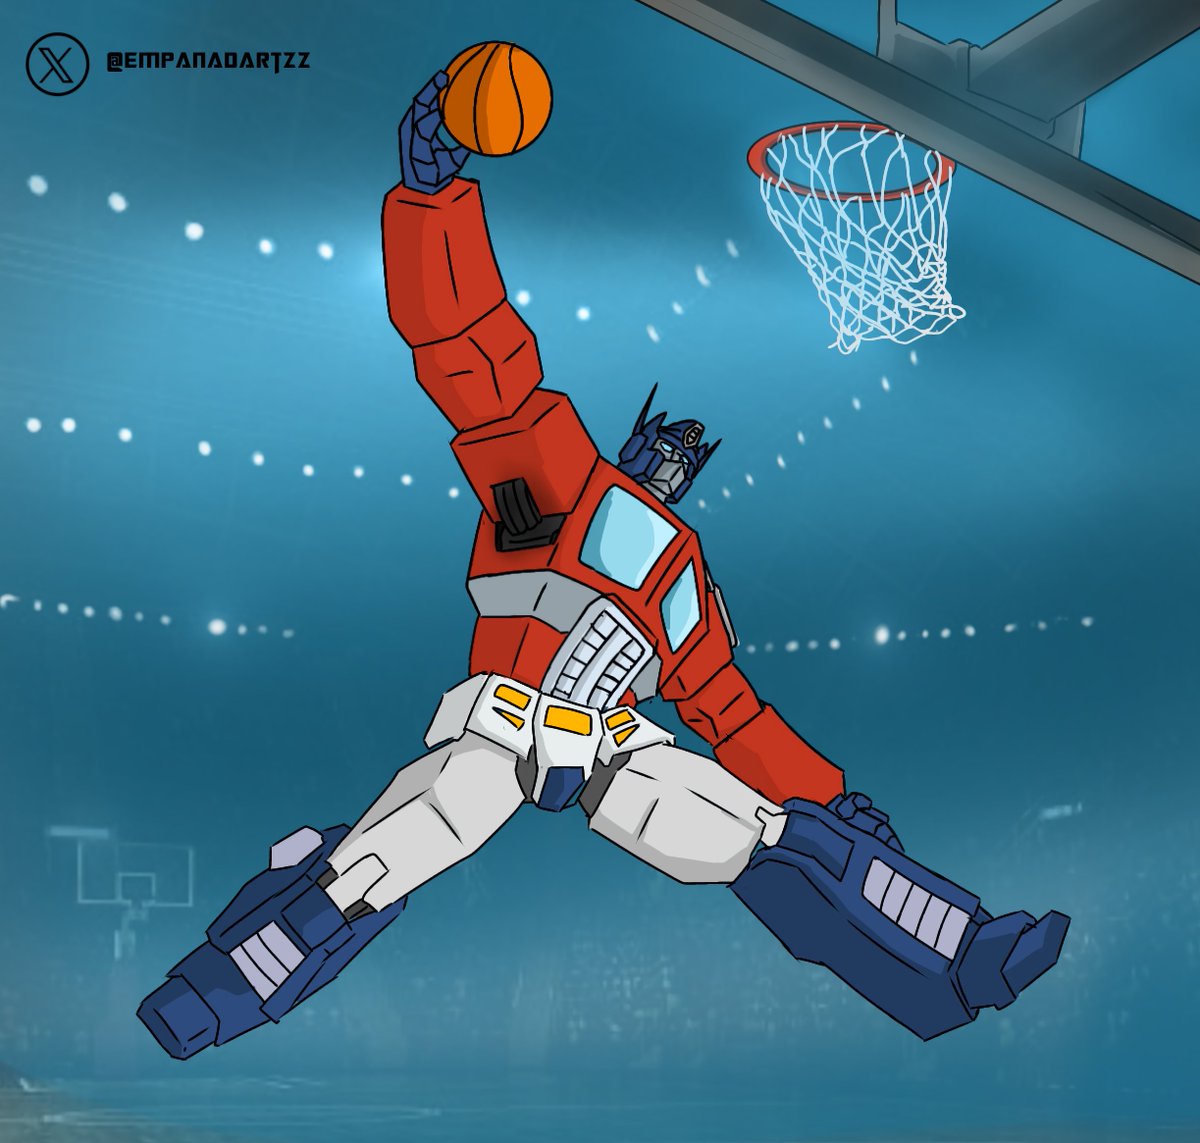 #TransformersOne #Transformers #OptimusPrime #Orionpax #Megatron #bumblebee #hasbro #Maccadam #maccadams #basketball